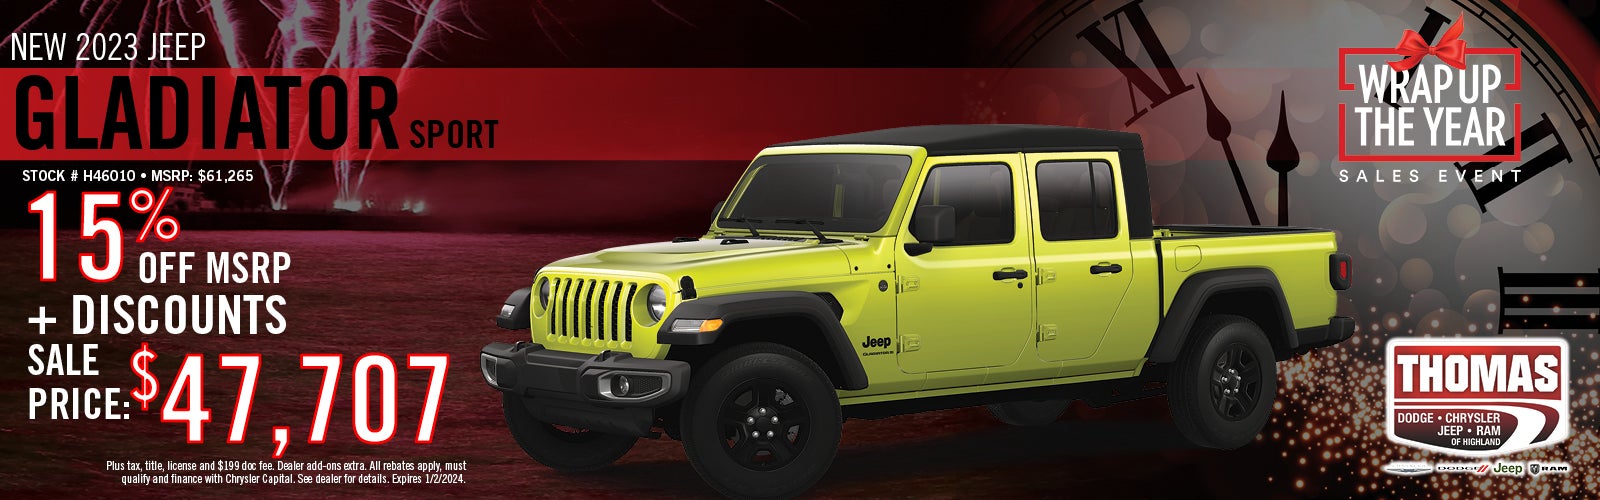 2023 Jeep Gladiator Buy Offer